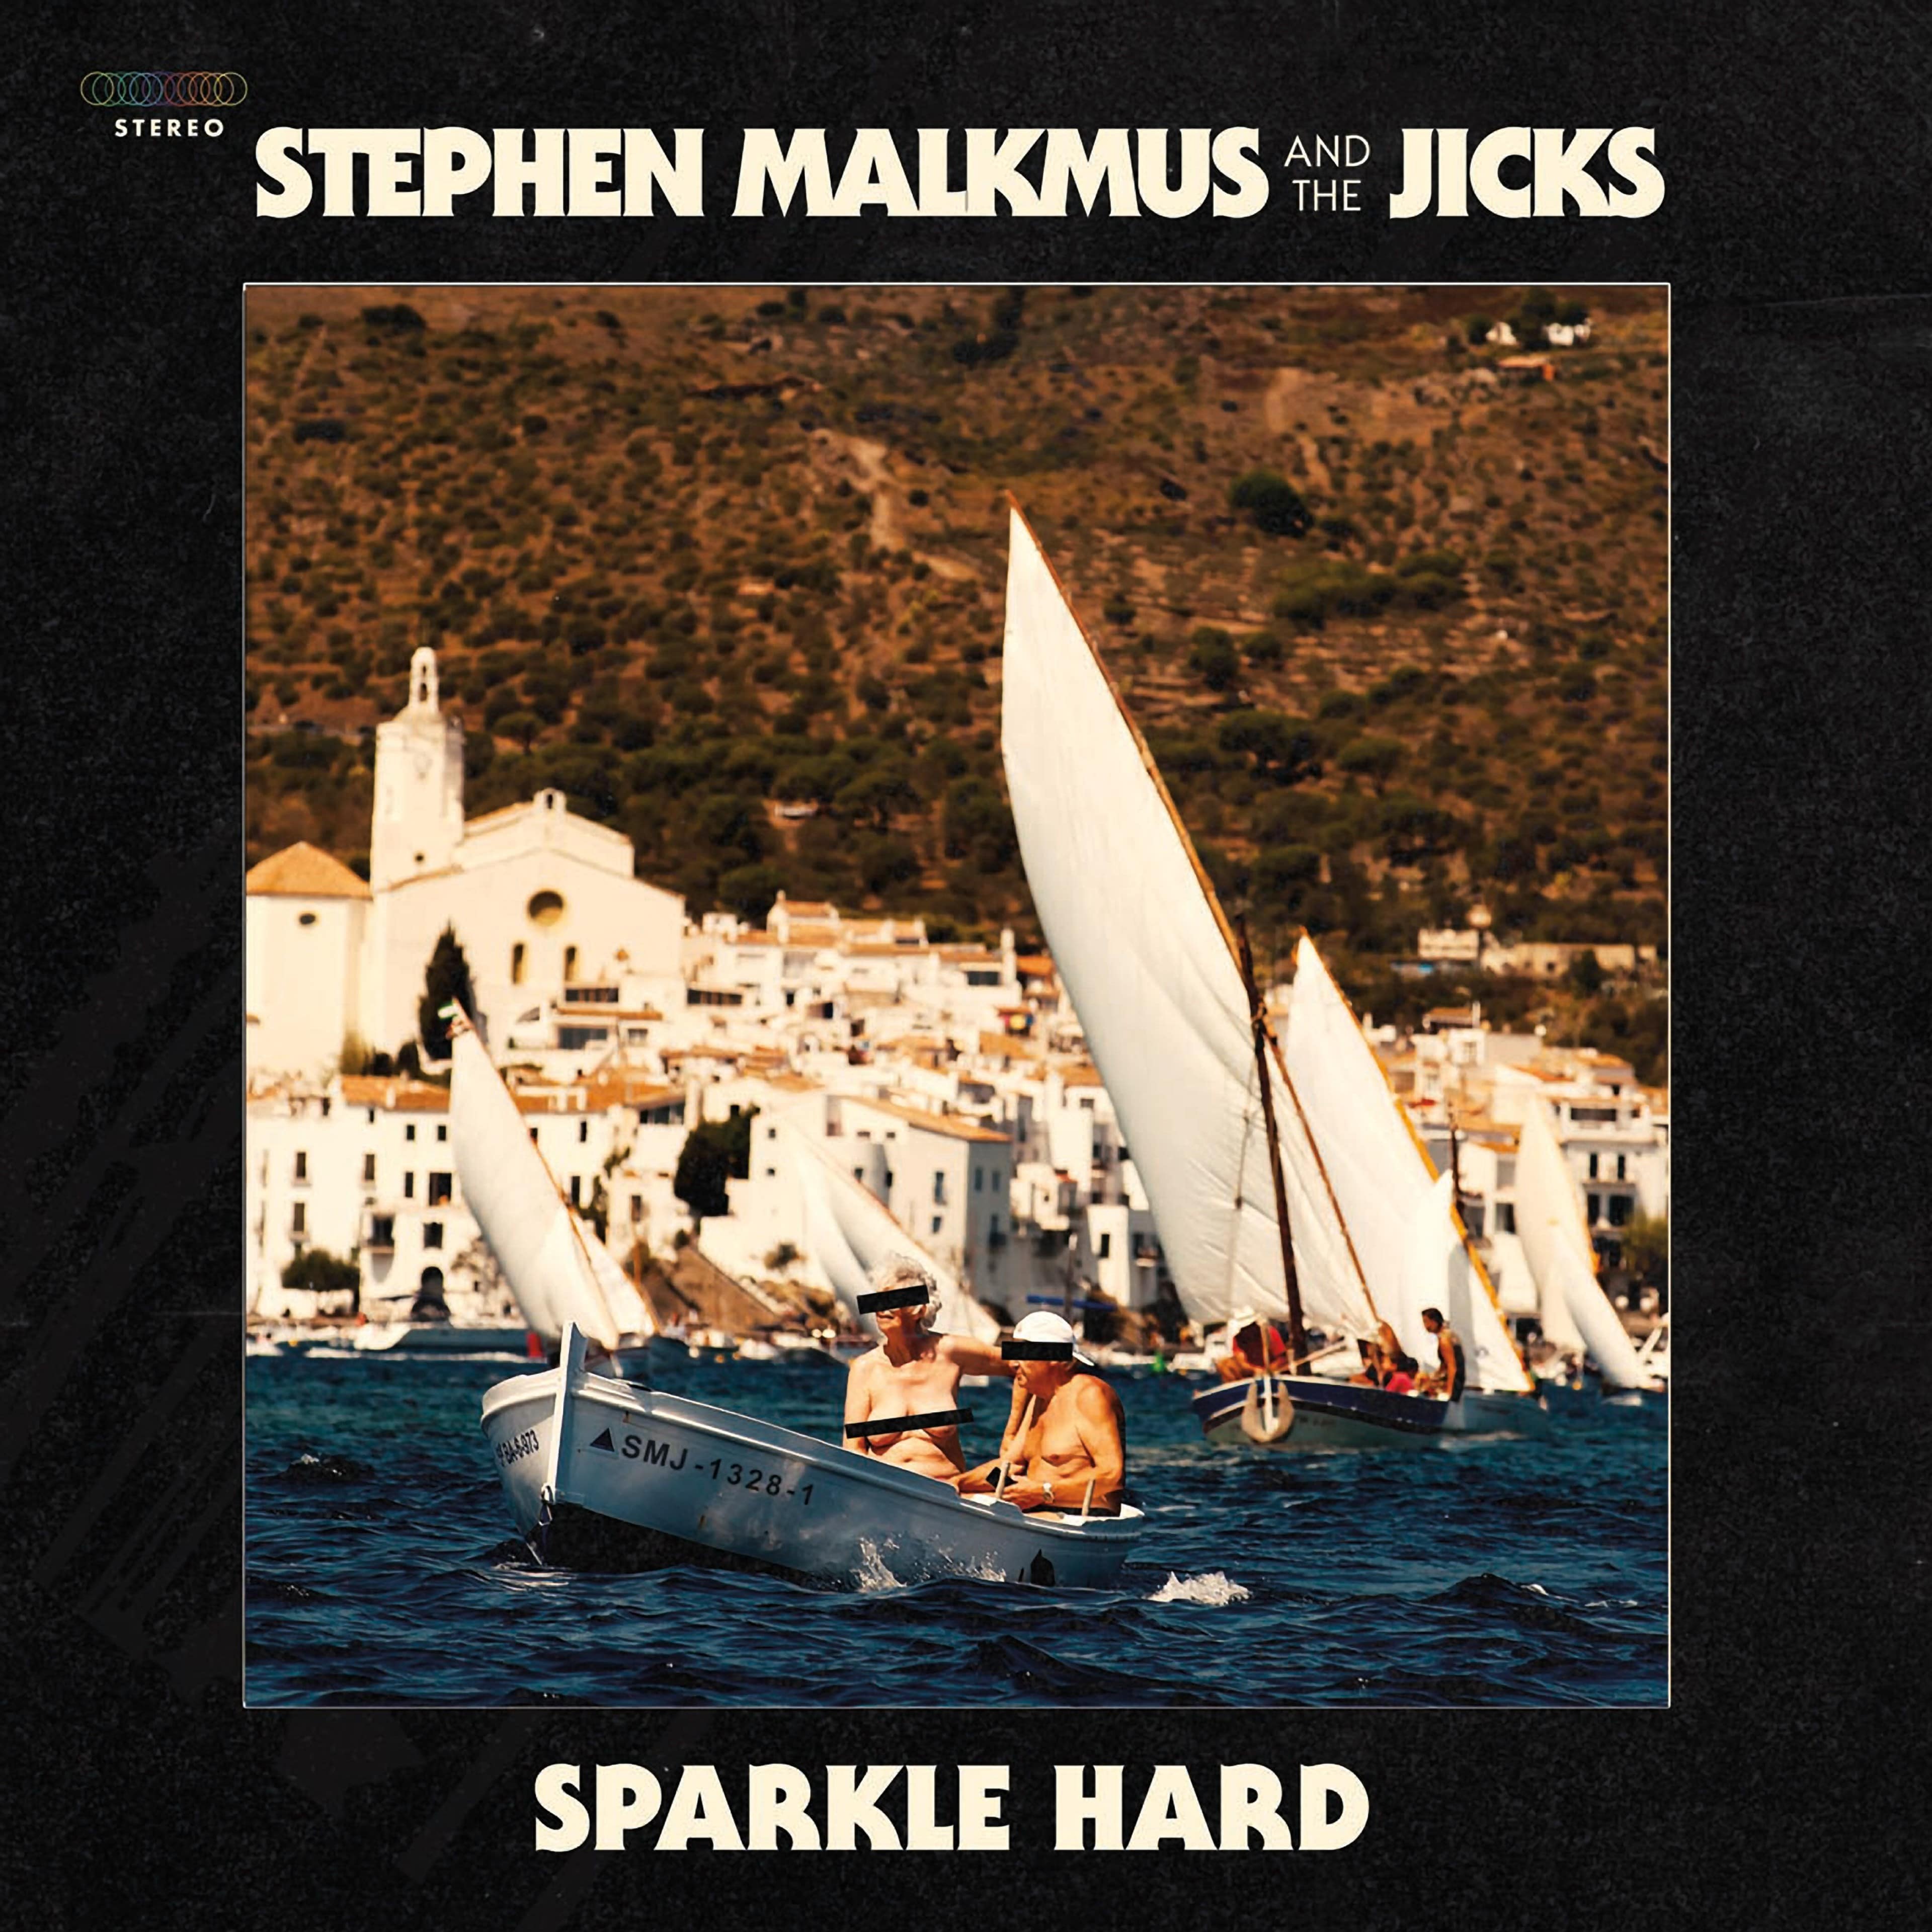 Listen to “Shiggy” from Stephen Malkmus & the Jicks